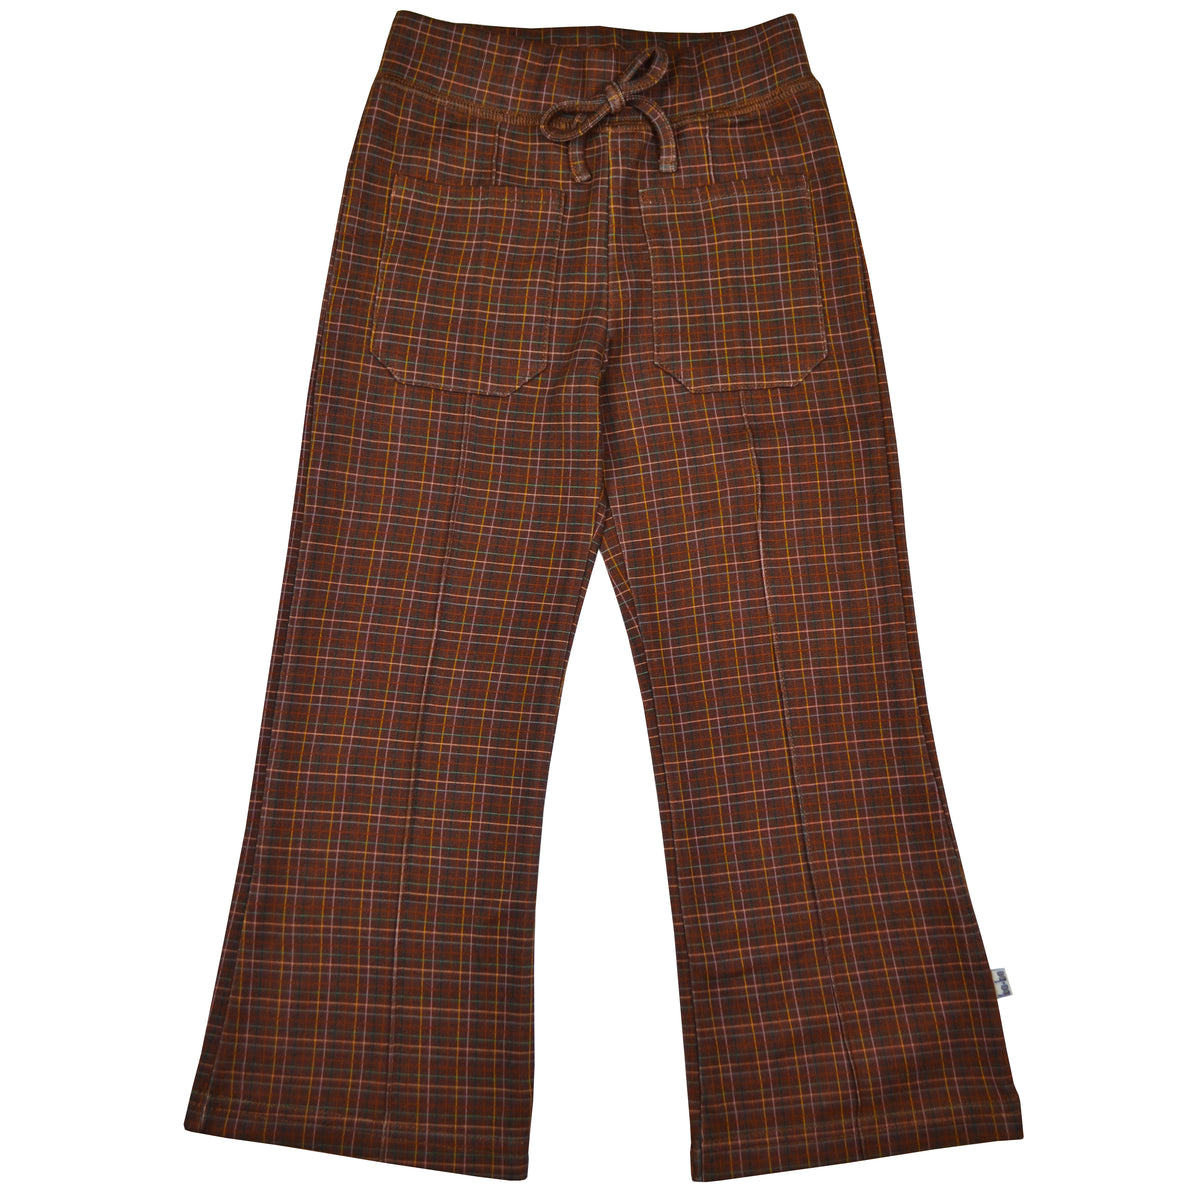 Baba Kidswear - Pocket Pants Brown Check